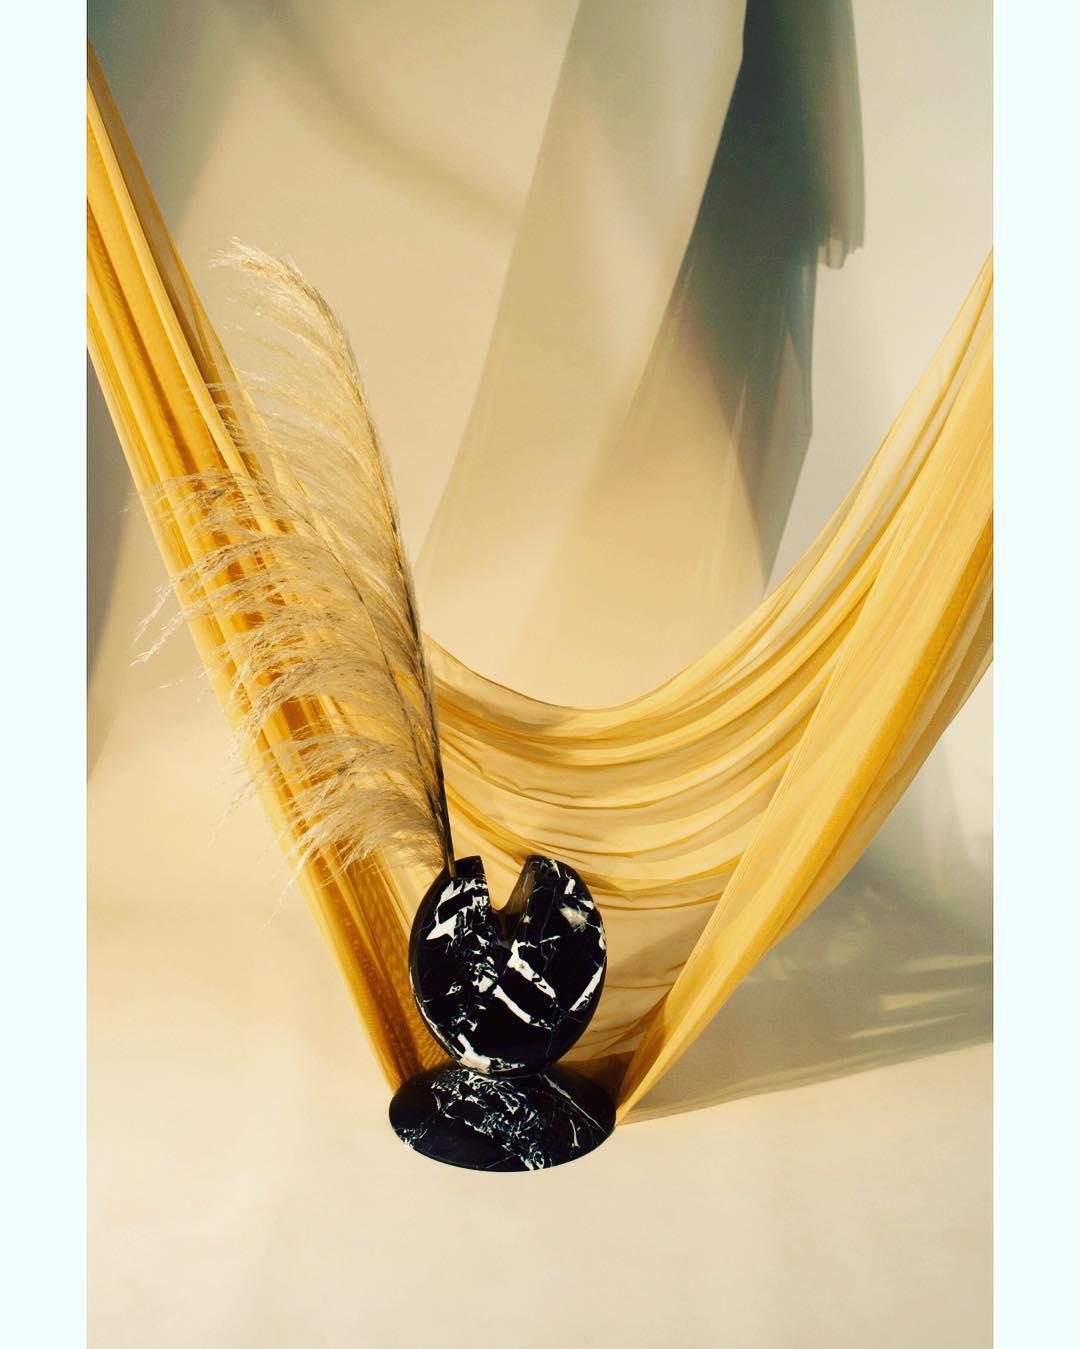 Iris, Marble Contemporary Vase, Valentina Cameranesi 2